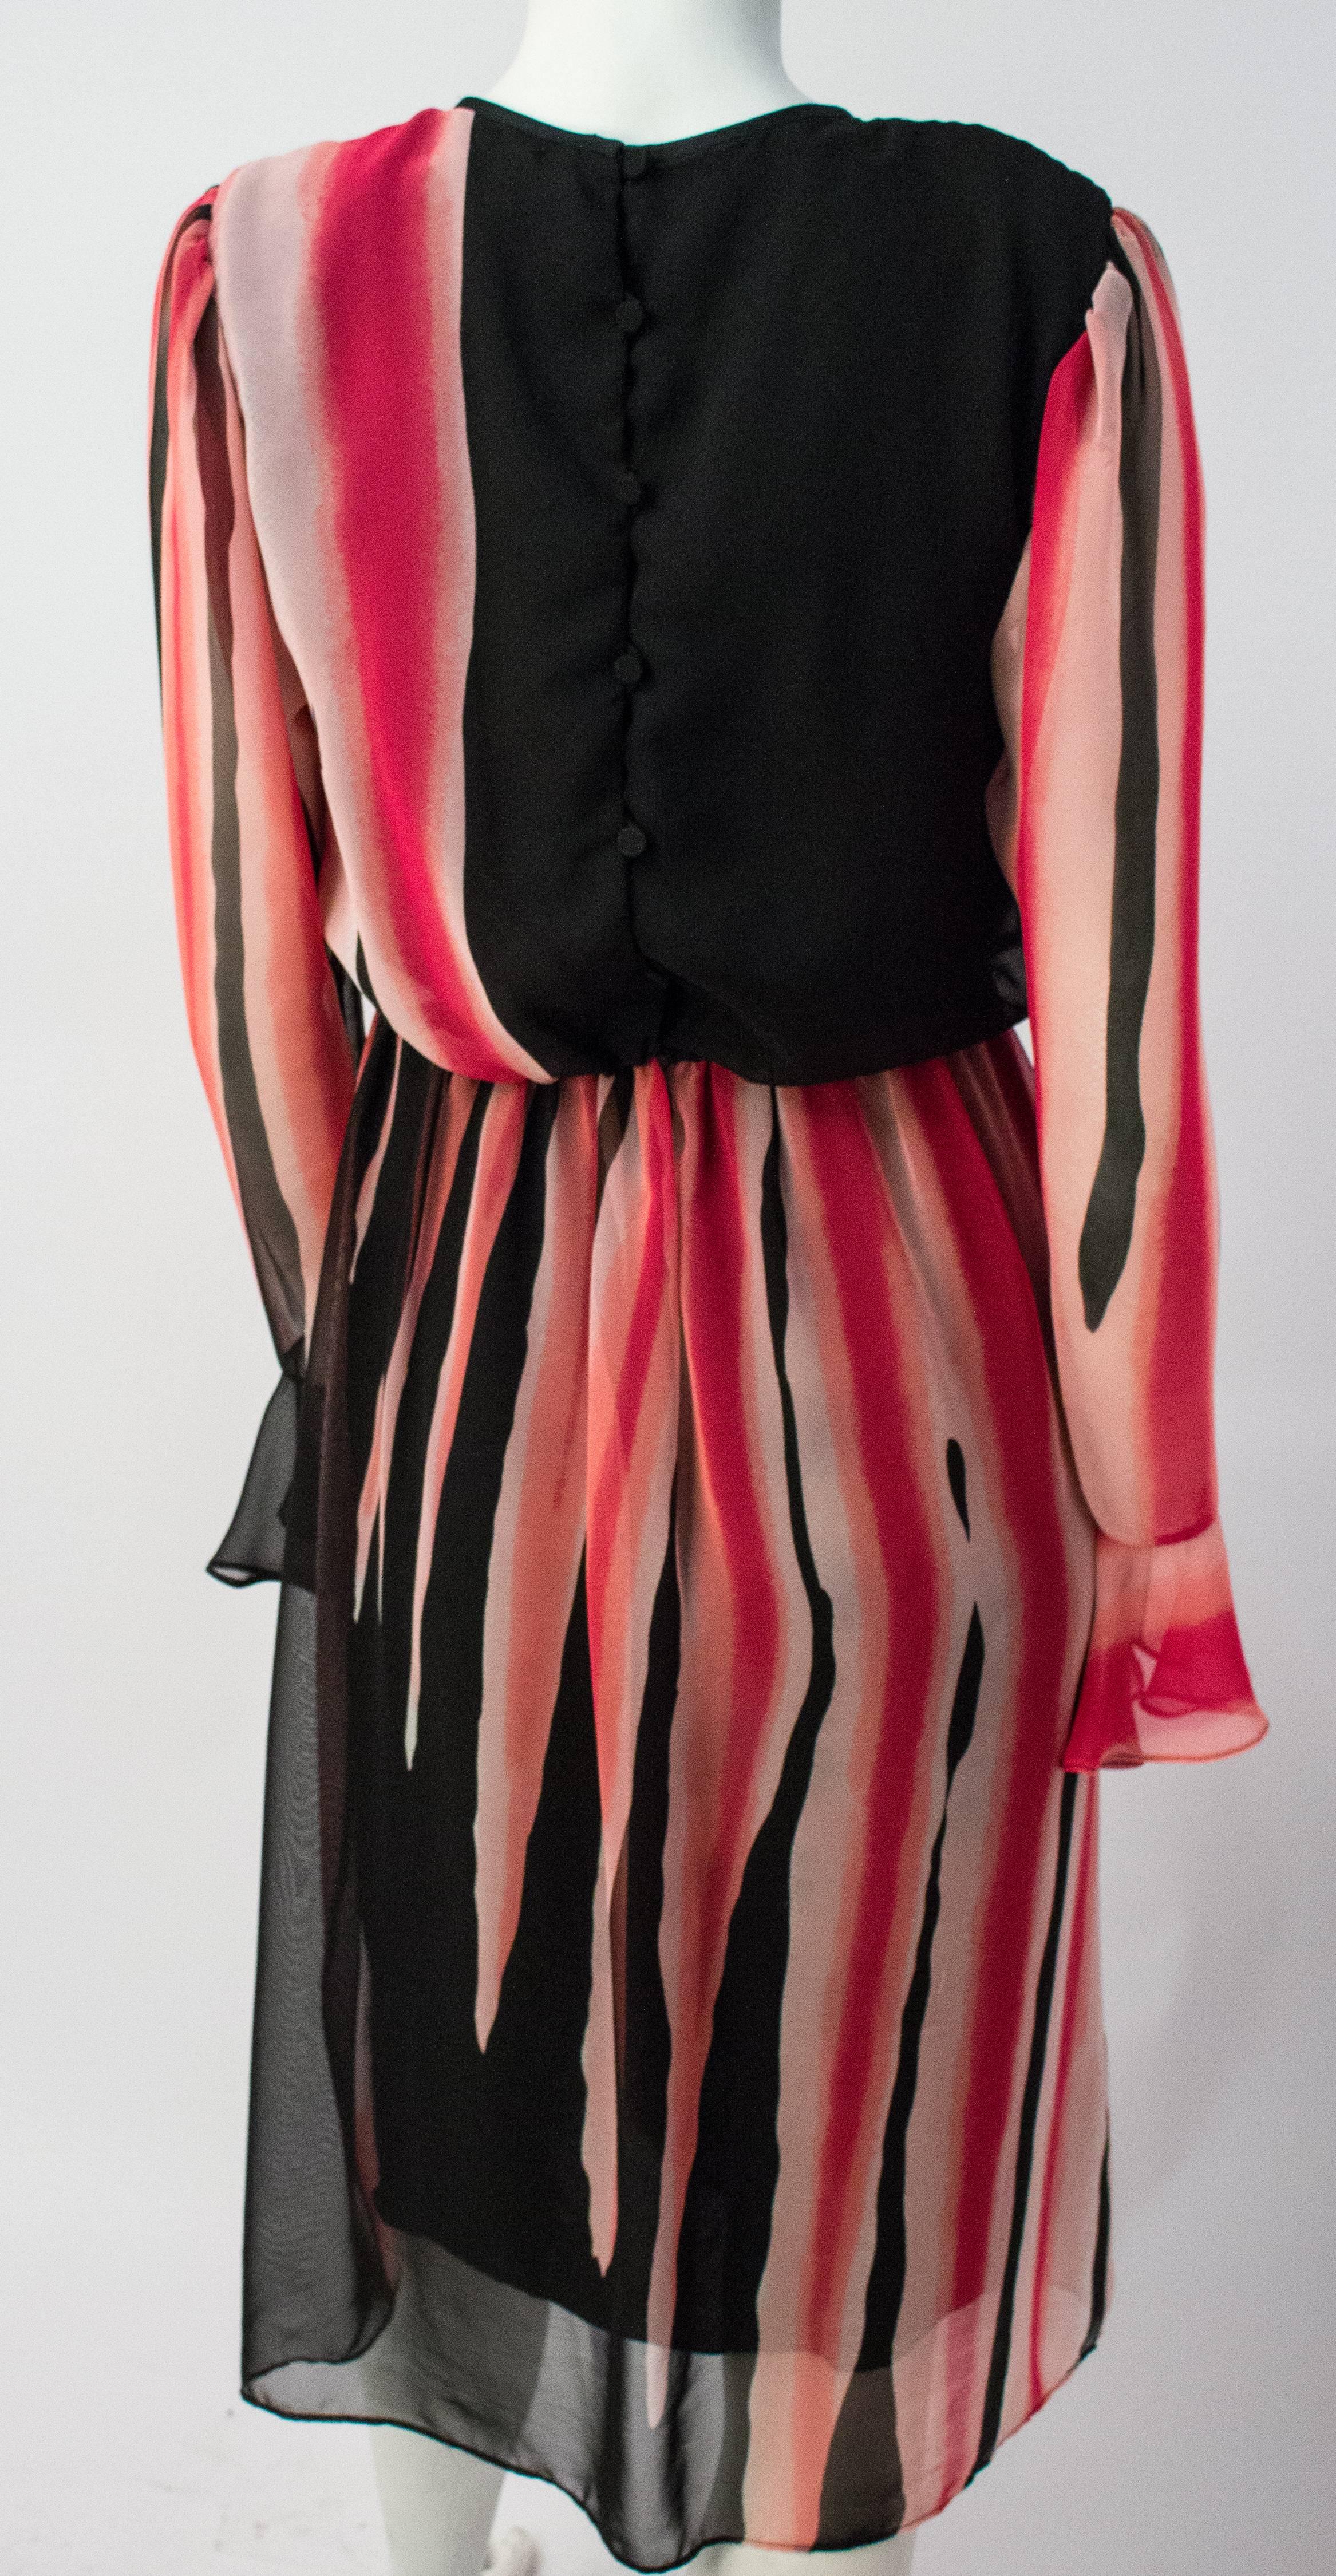 80s Hanae Mori Printed Silk Chiffon Magenta and Black Dress. Lined bodice and skirt. Back button closure. Elasticated waist, 26